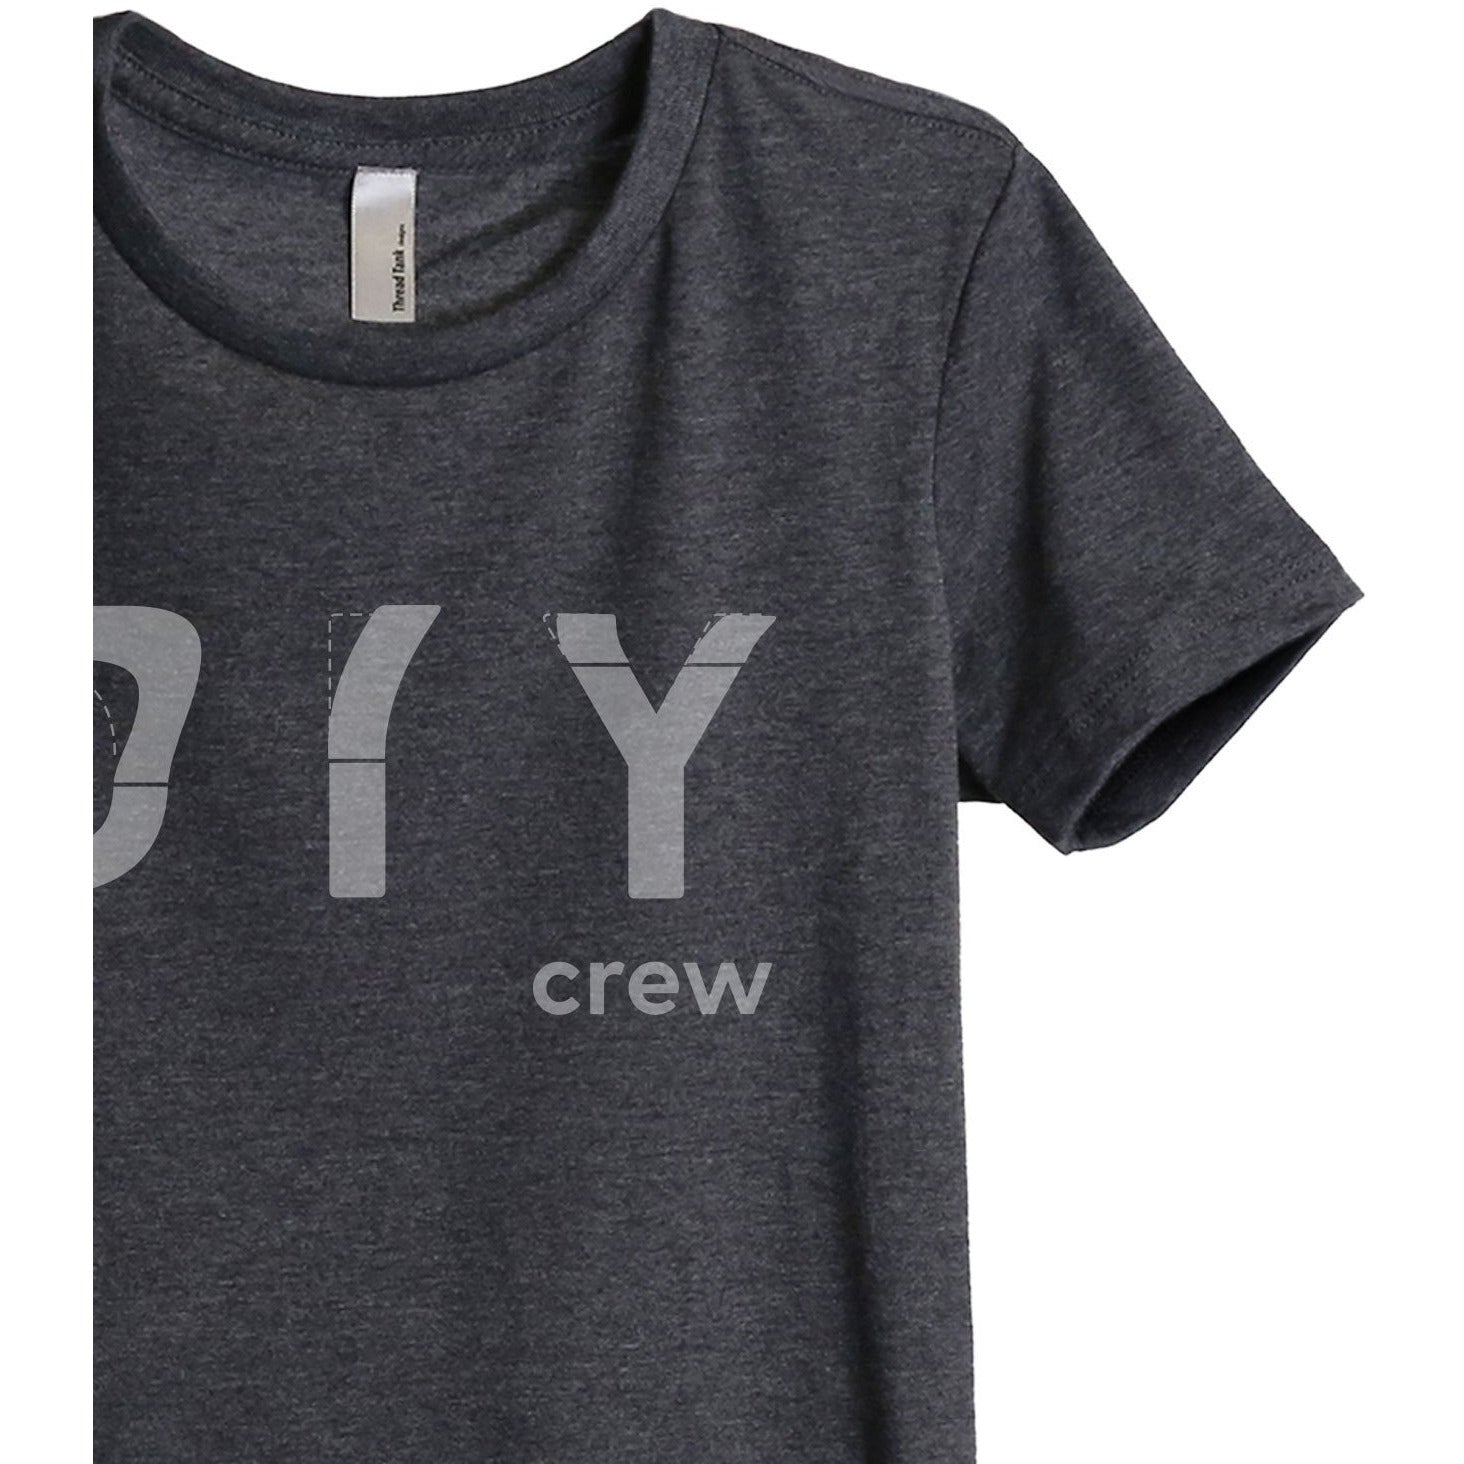 DIY Crew Women's Relaxed Crewneck T-Shirt Top Tee Charcoal Grey
